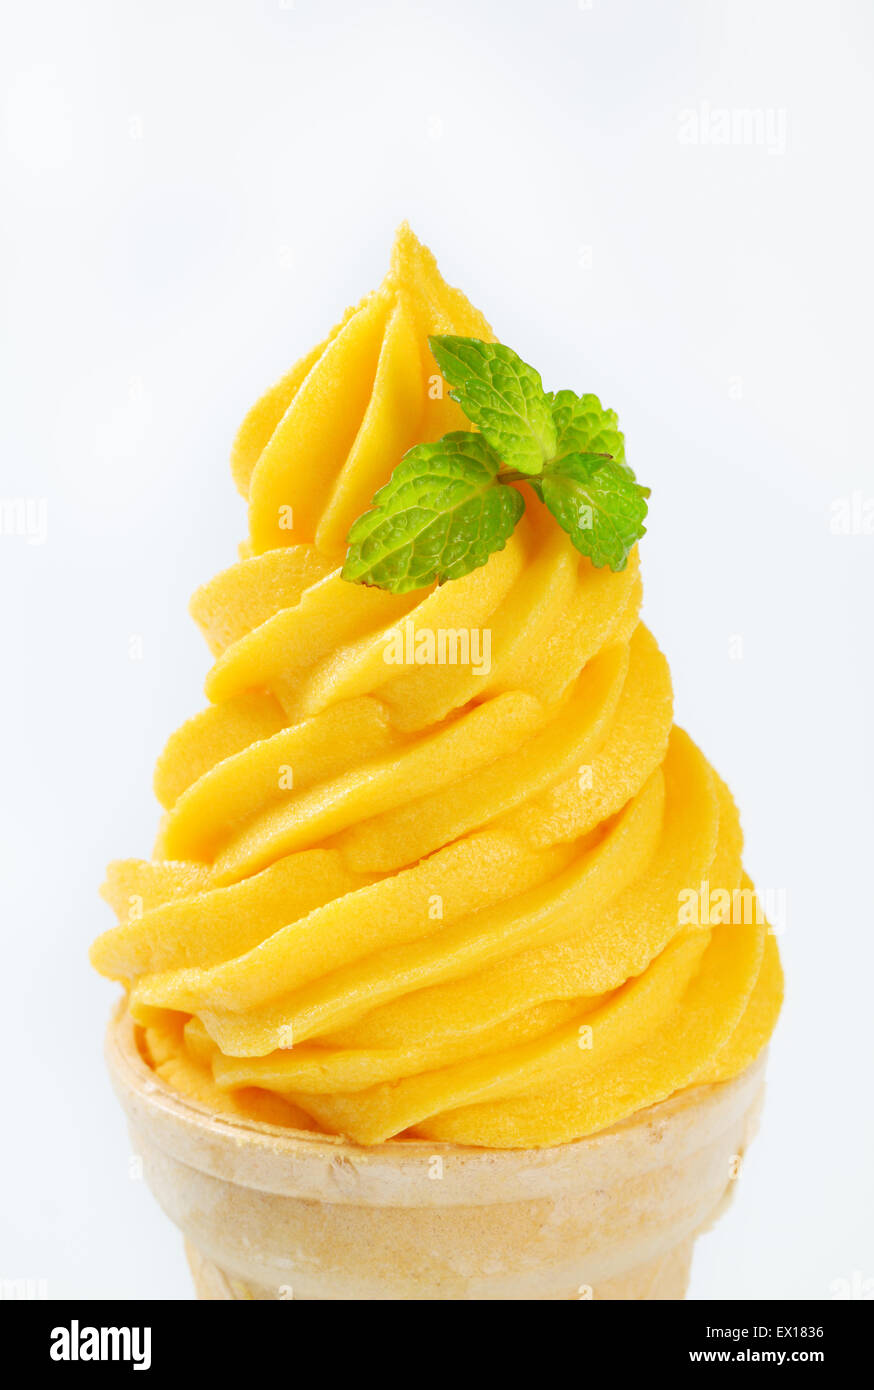 Soft serve ice cream cone Stock Photo